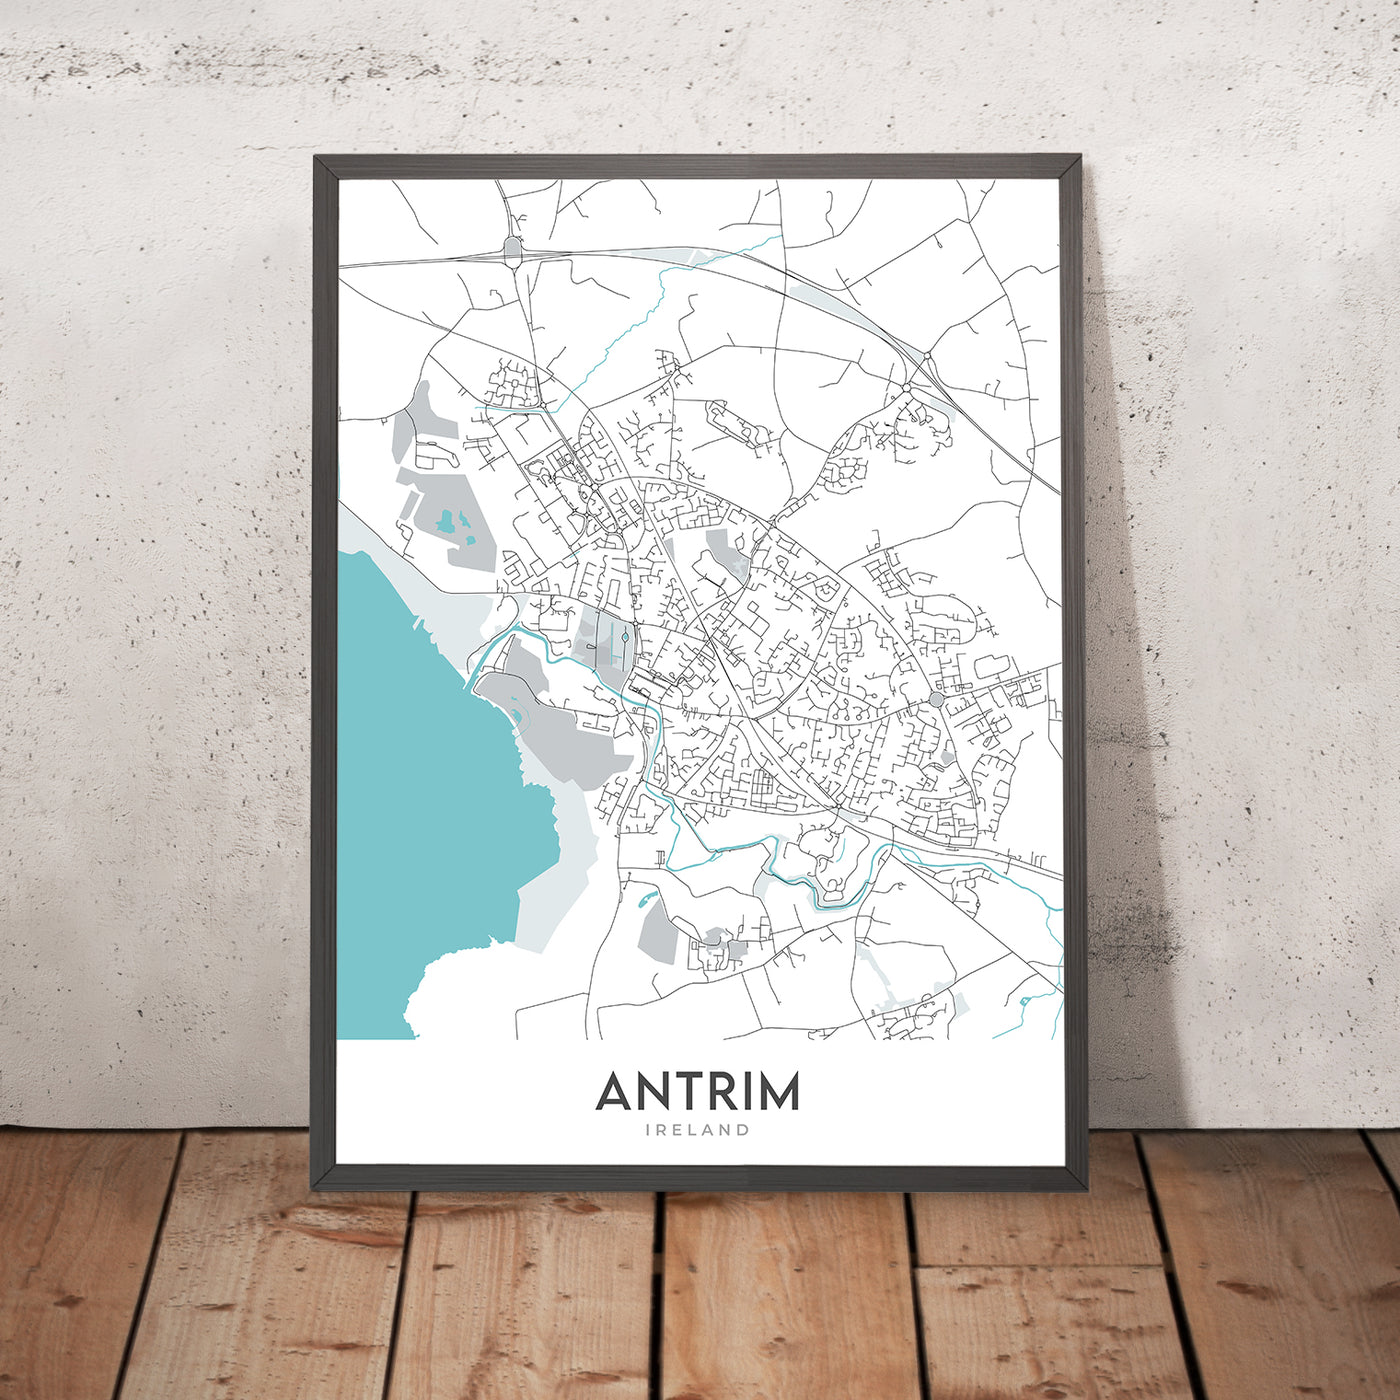 Mapa moderno de la ciudad de Antrim, Irlanda del Norte: Castle Gardens, Round Tower, Dublin Rd, Lough Neagh, A26